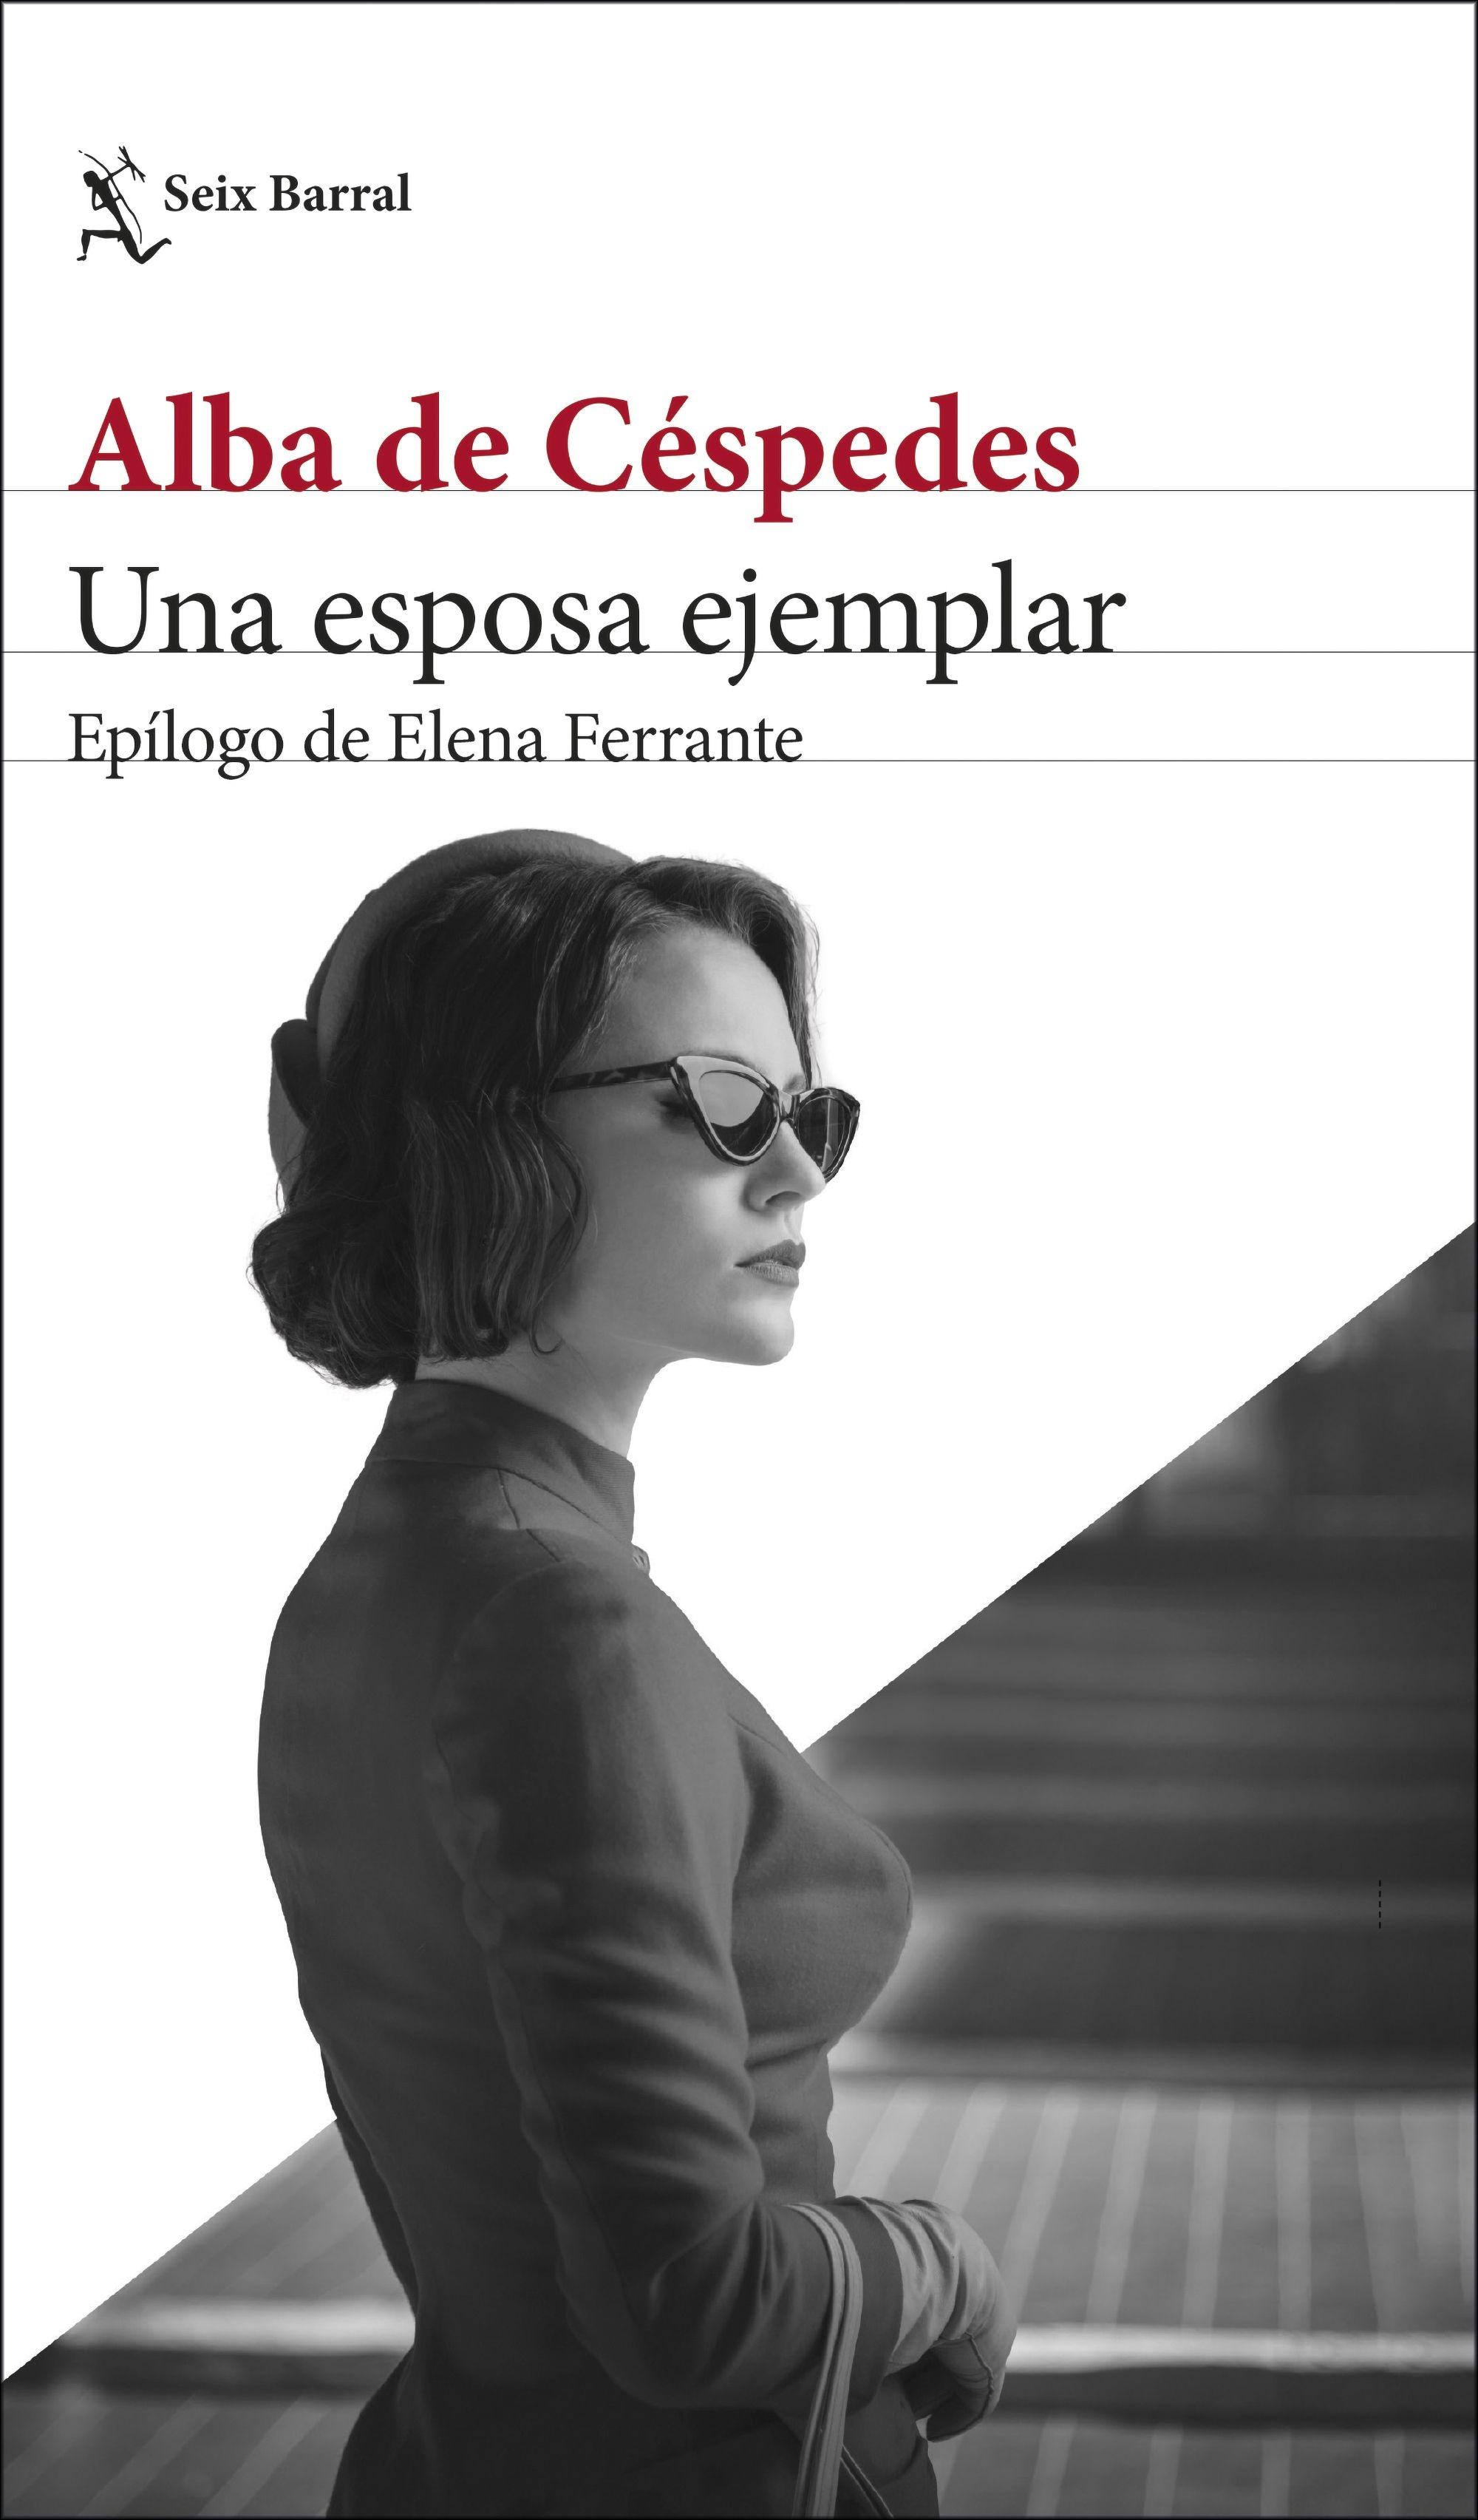 Una Esposa Ejemplar "Epílogo de Elena Ferrante"